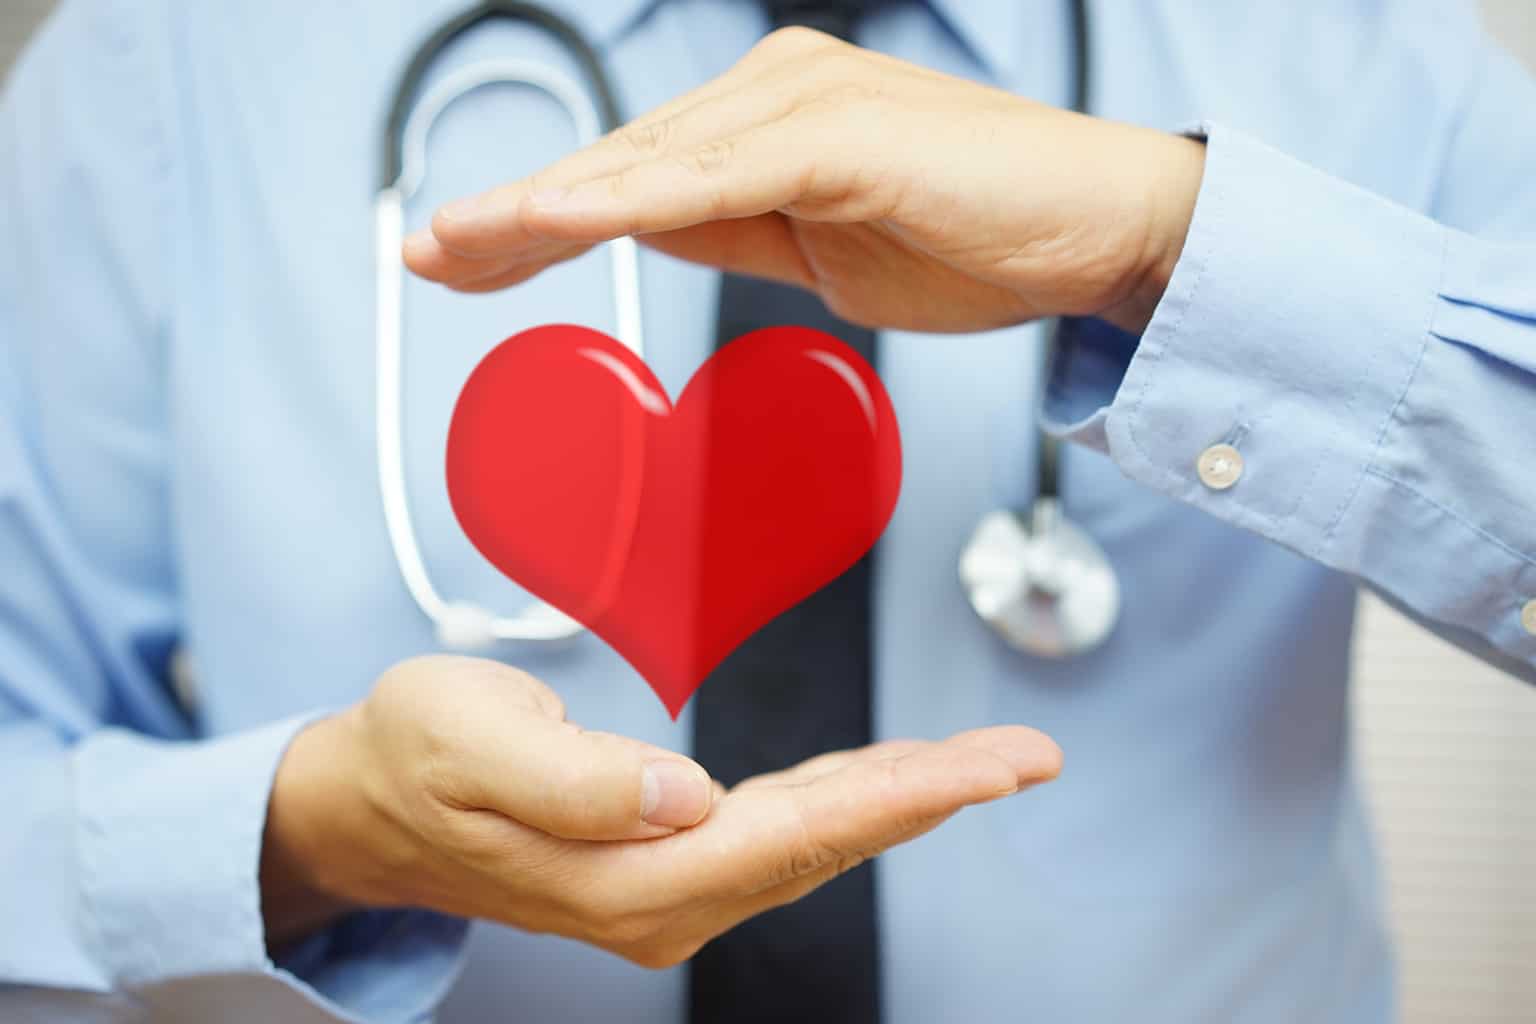 The strangest secret to heart health